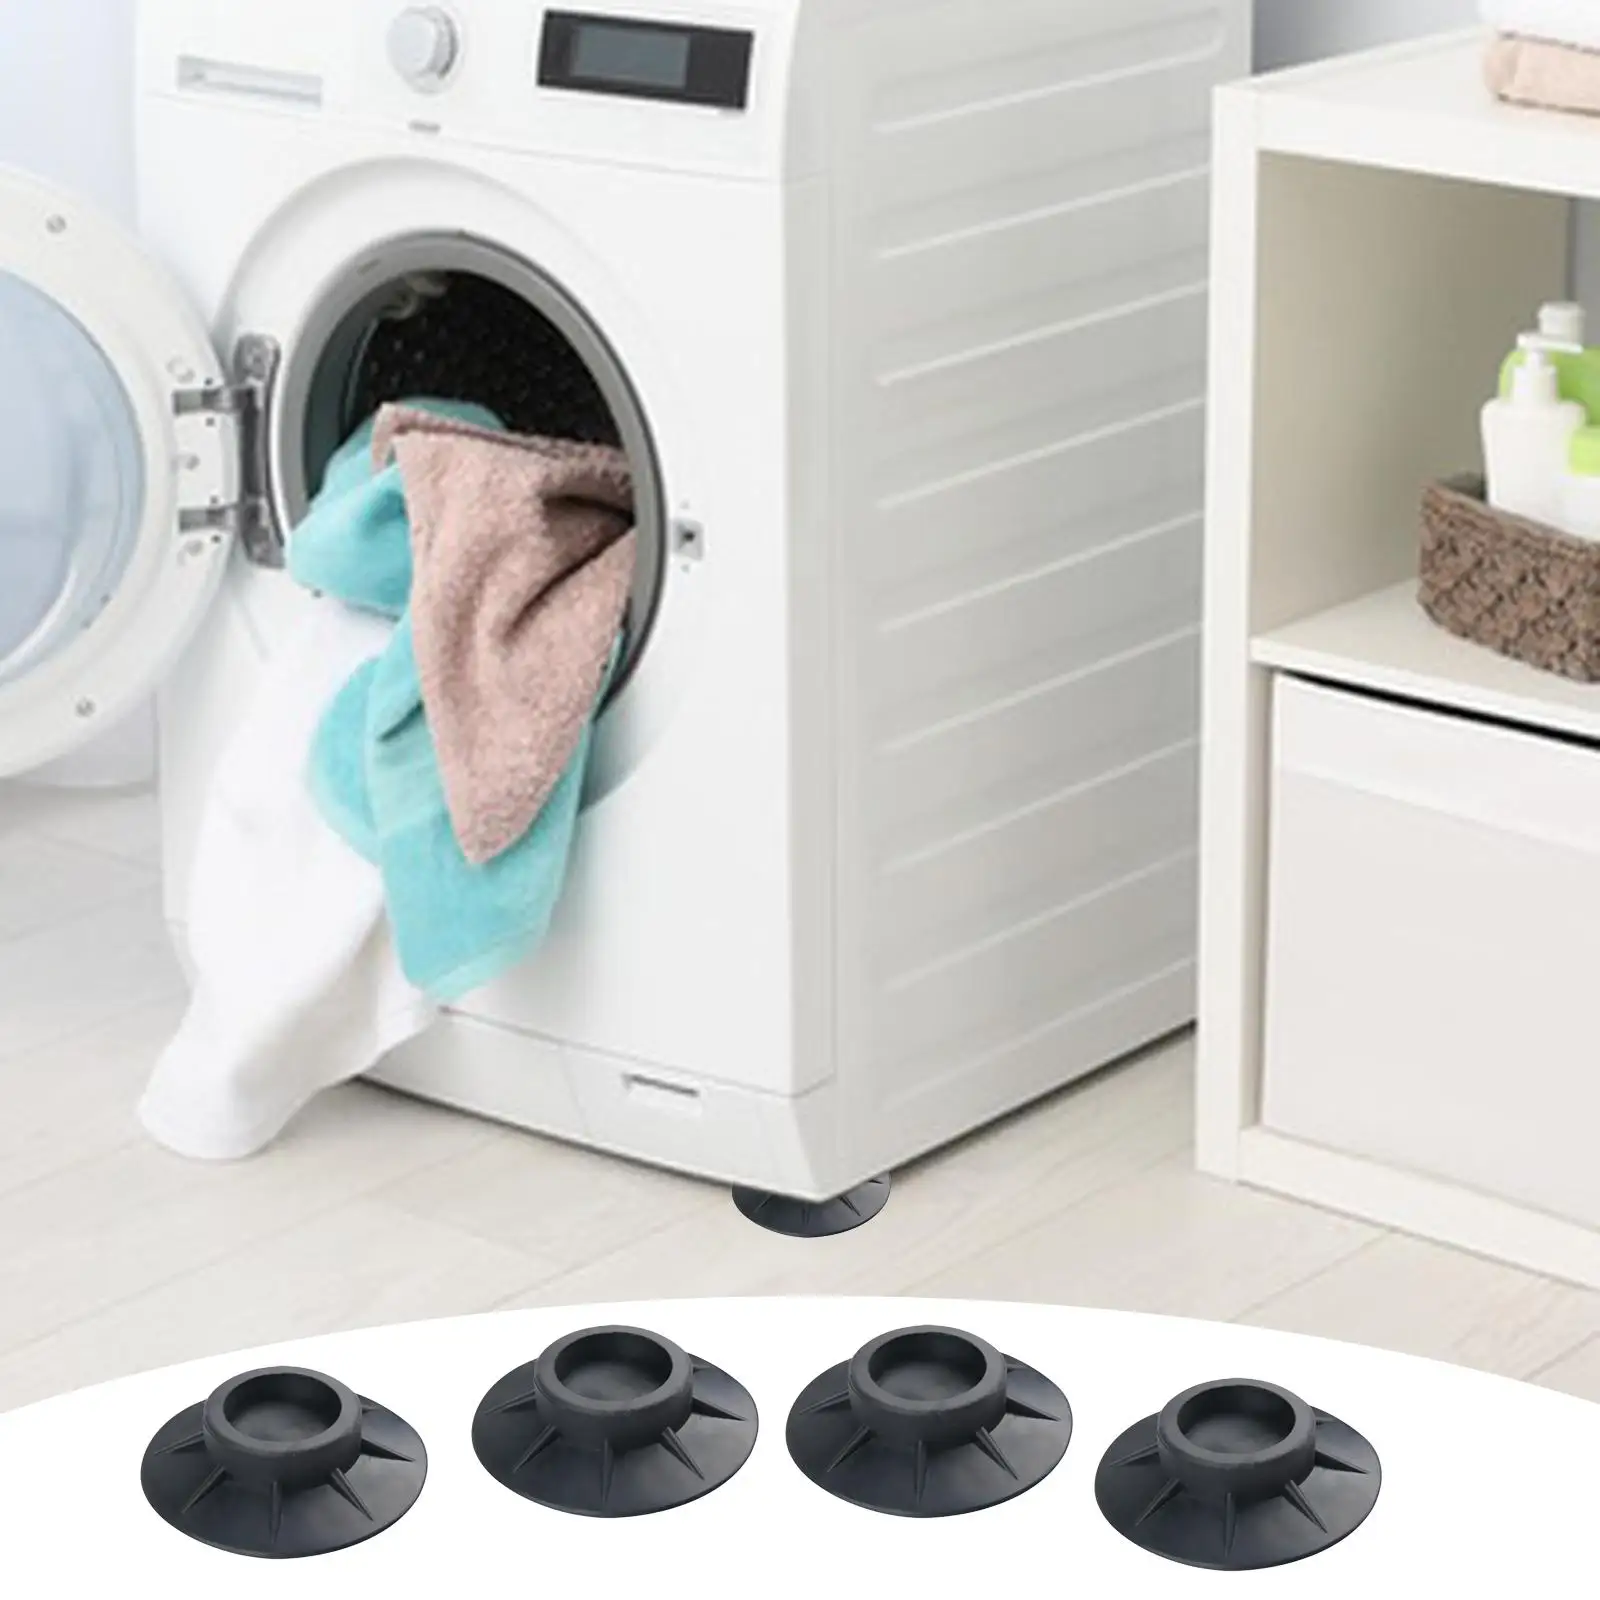 4Pcs Dryer Pedestals Noise Dampening Protector Silent Washers for Dishwashers